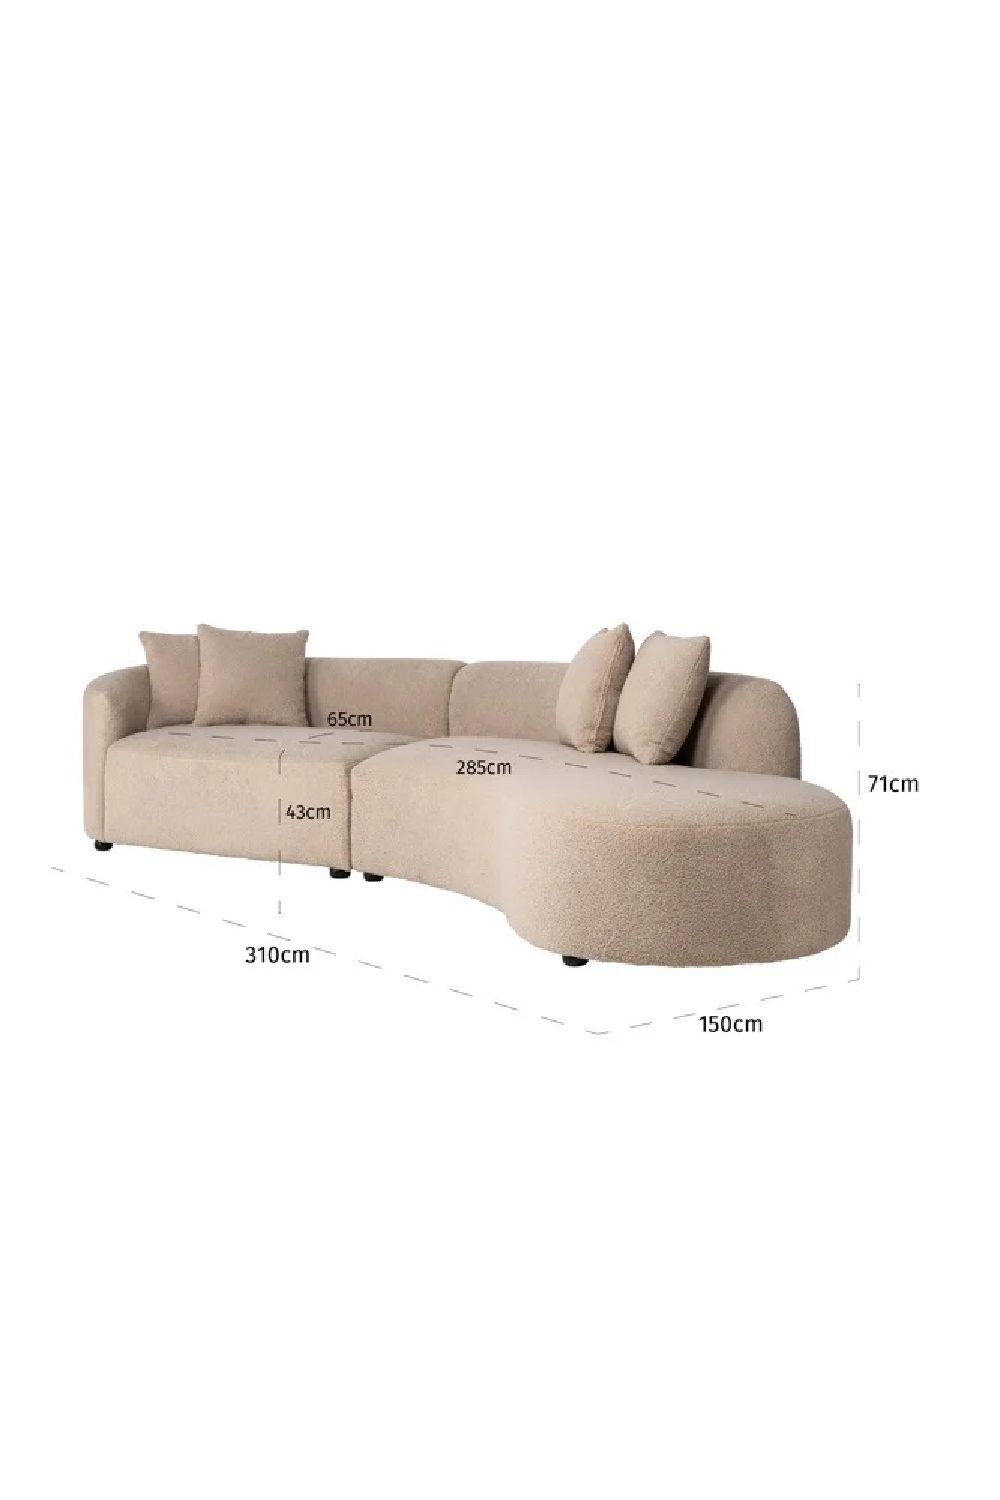 Brown Curve Upholstered Sofa | OROA Grayson | Oroa.com